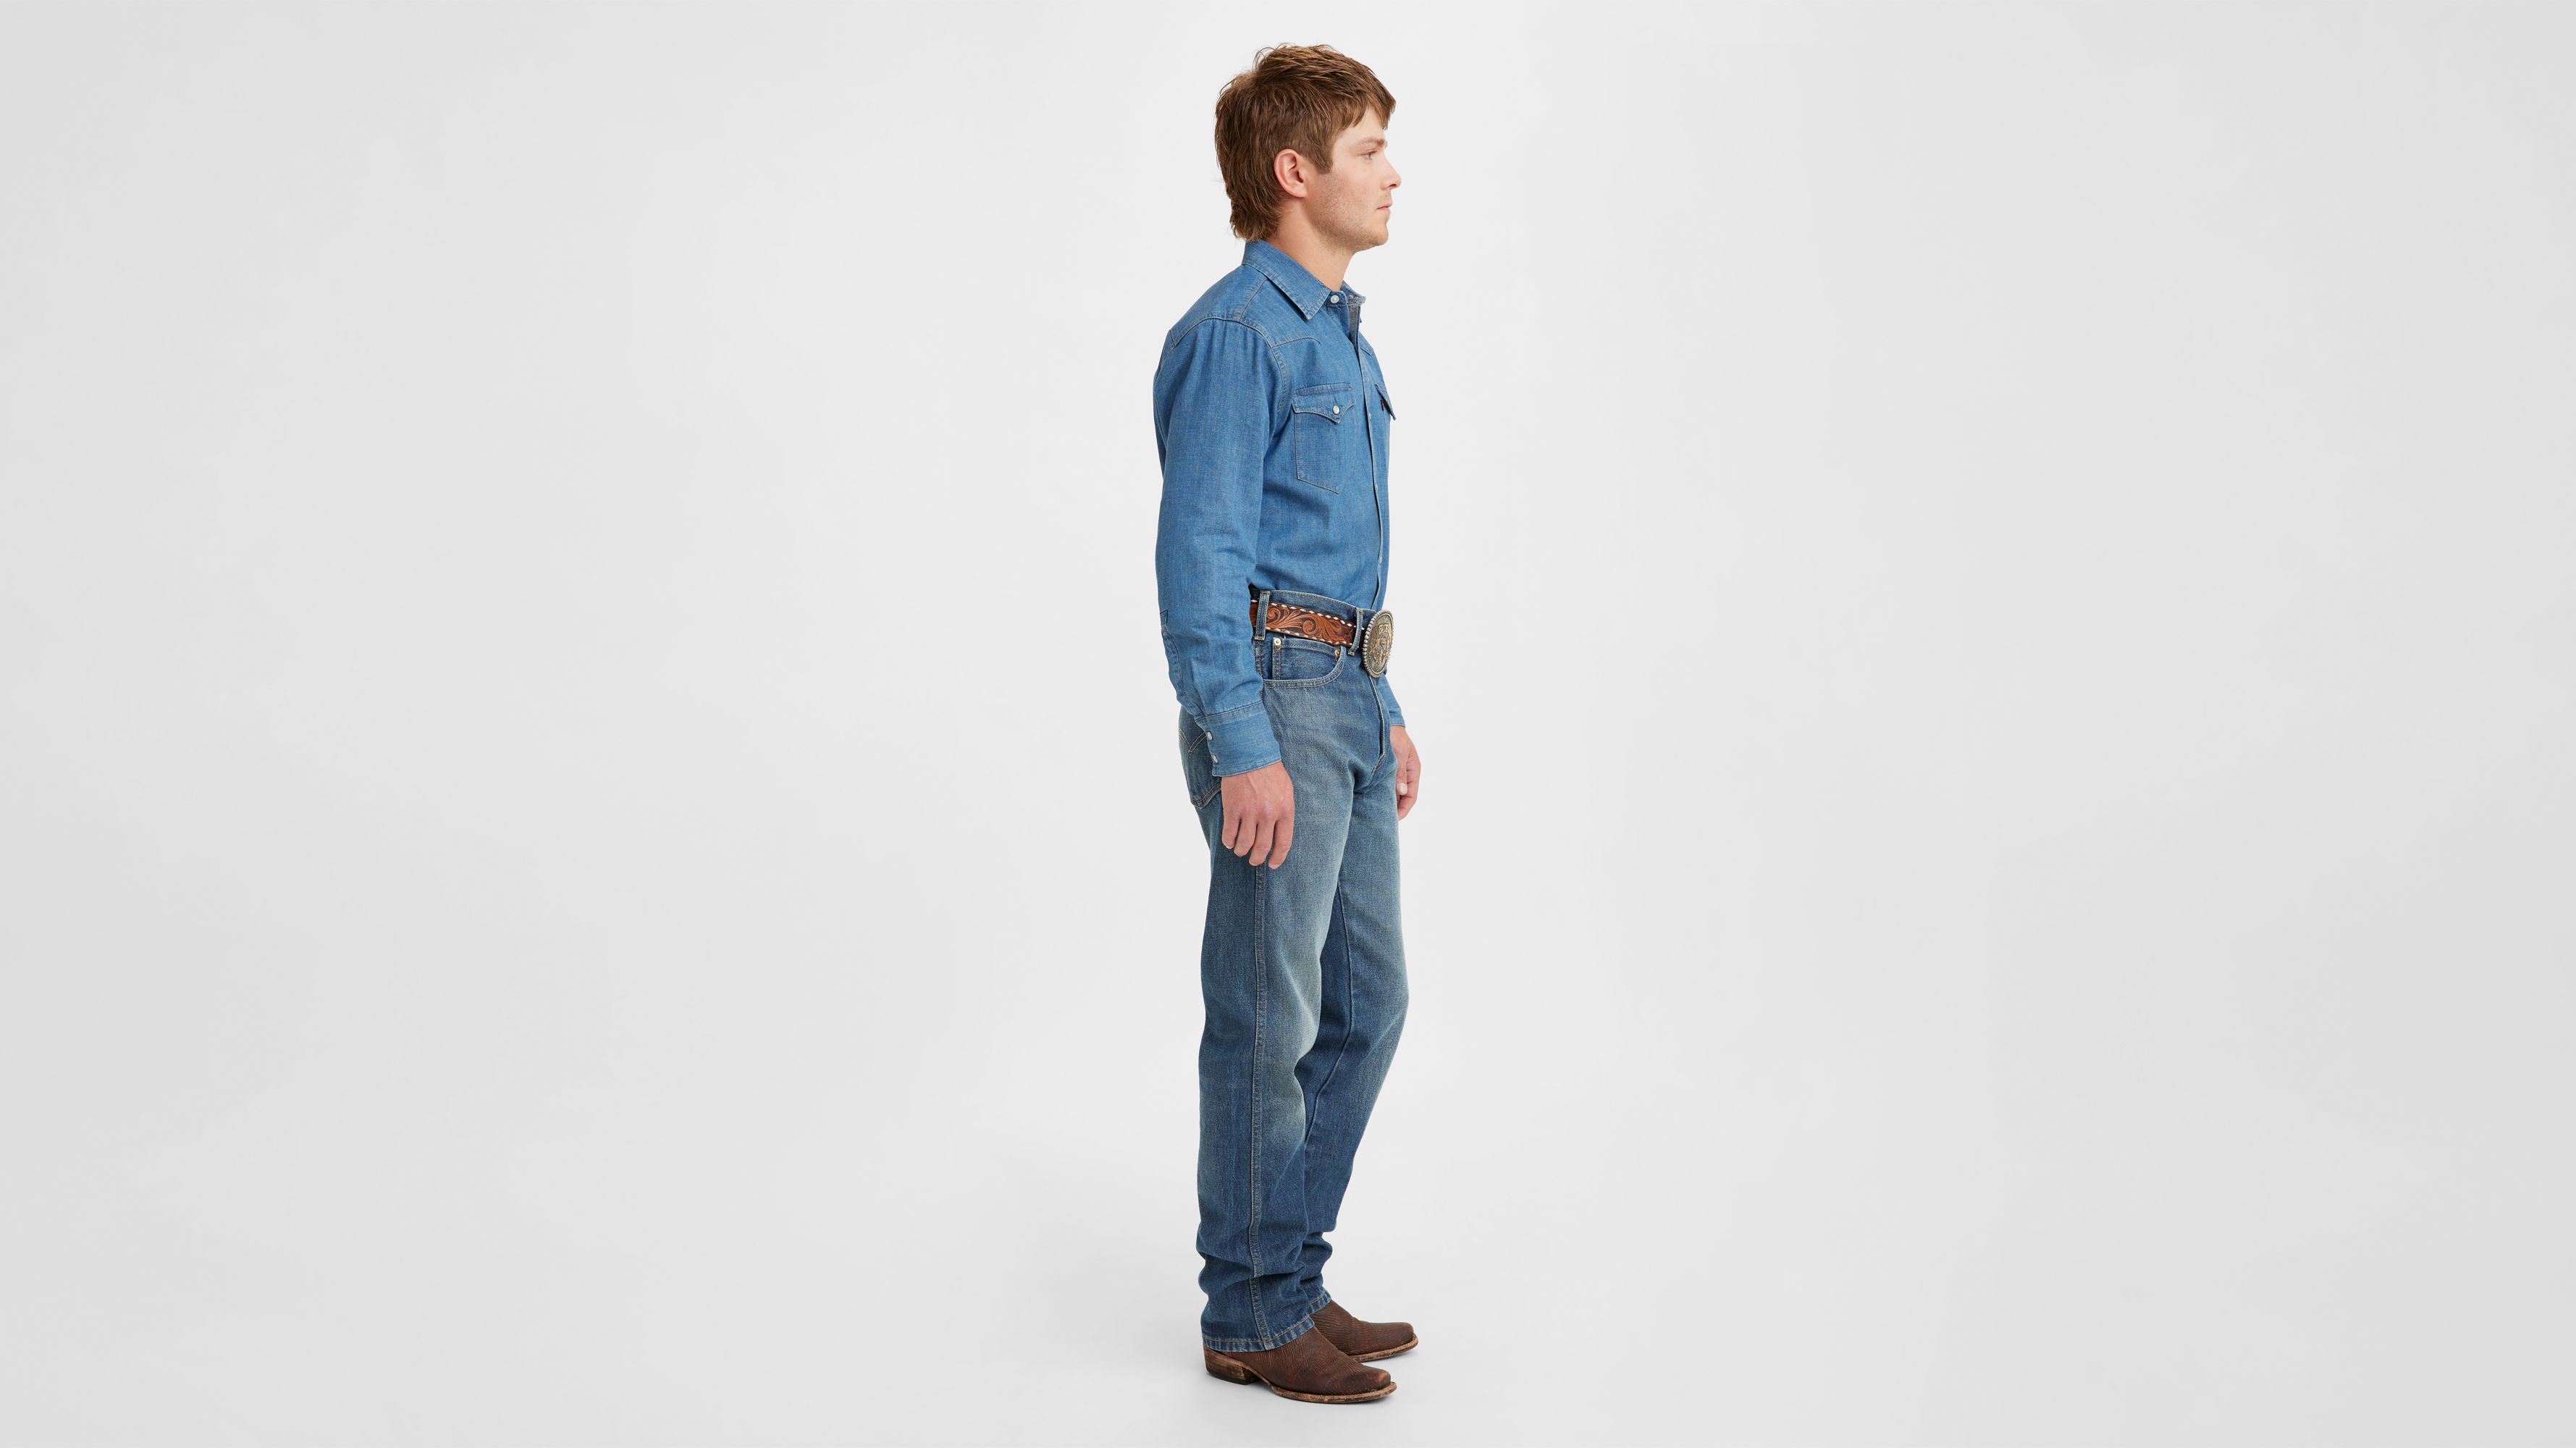 Western Fit Men's Jeans - Medium Wash